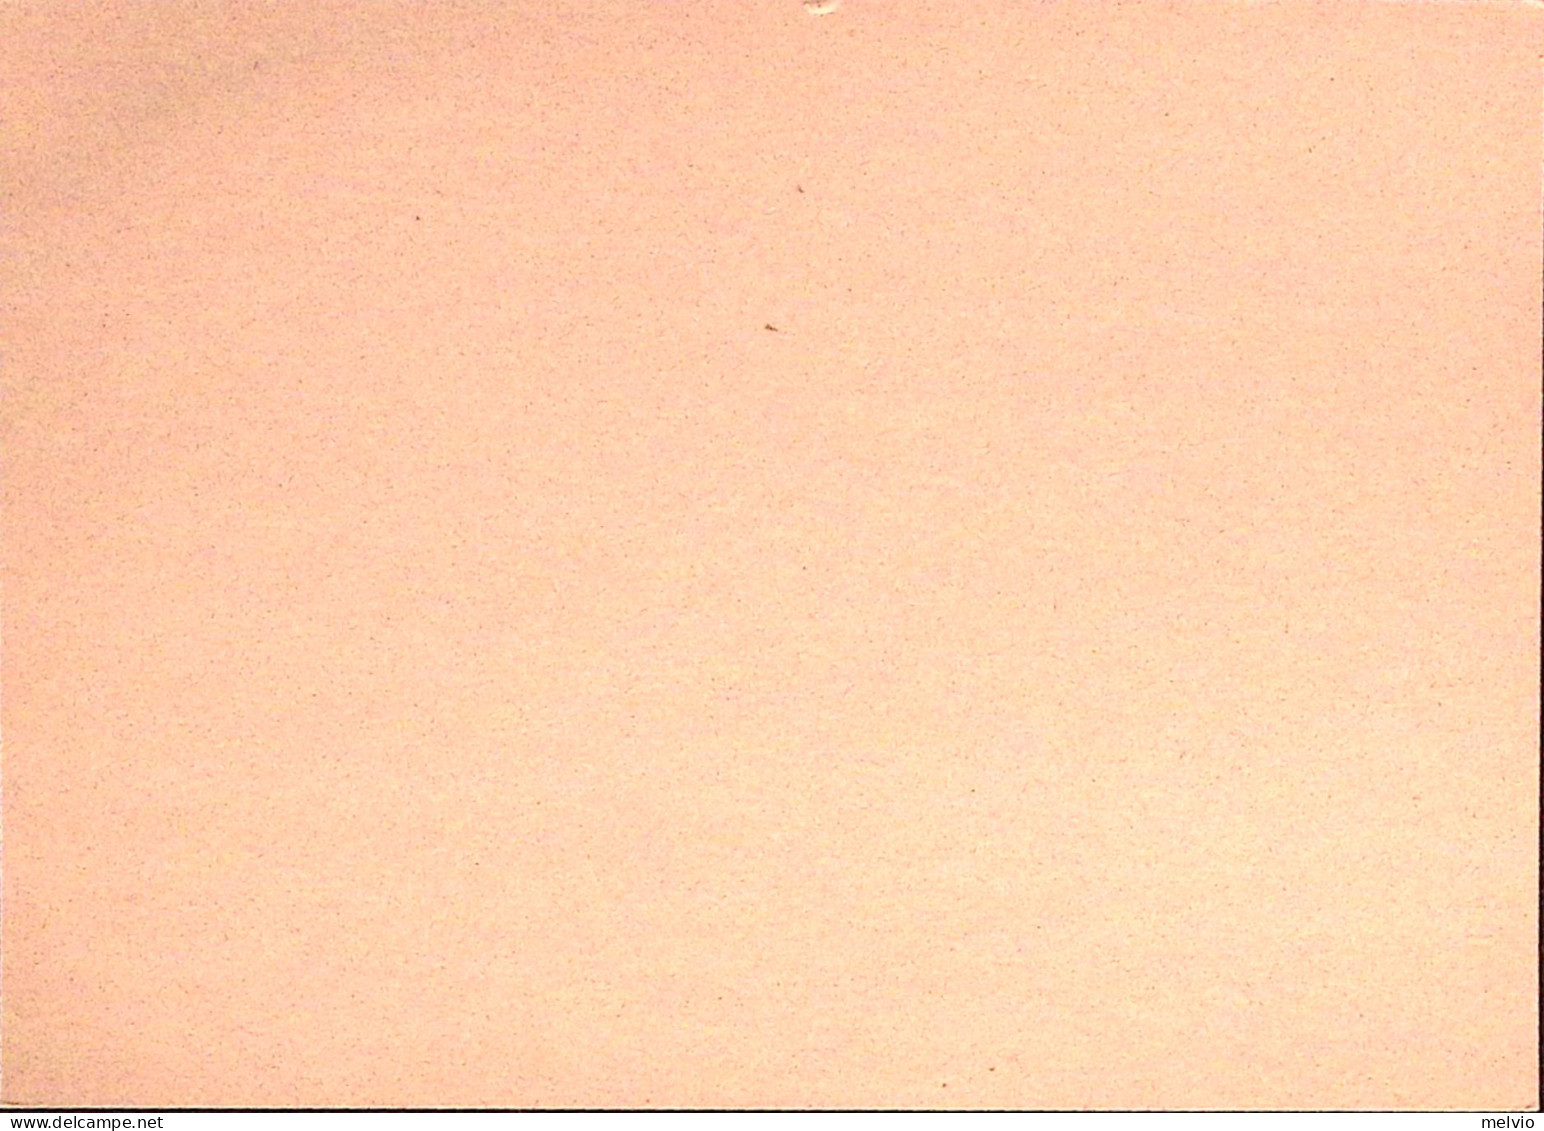 1969-COMITATO UNICEF Guttuso Cartolina Postale IPZS Lire 180 + Lire 2870 Nuova - Postwaardestukken